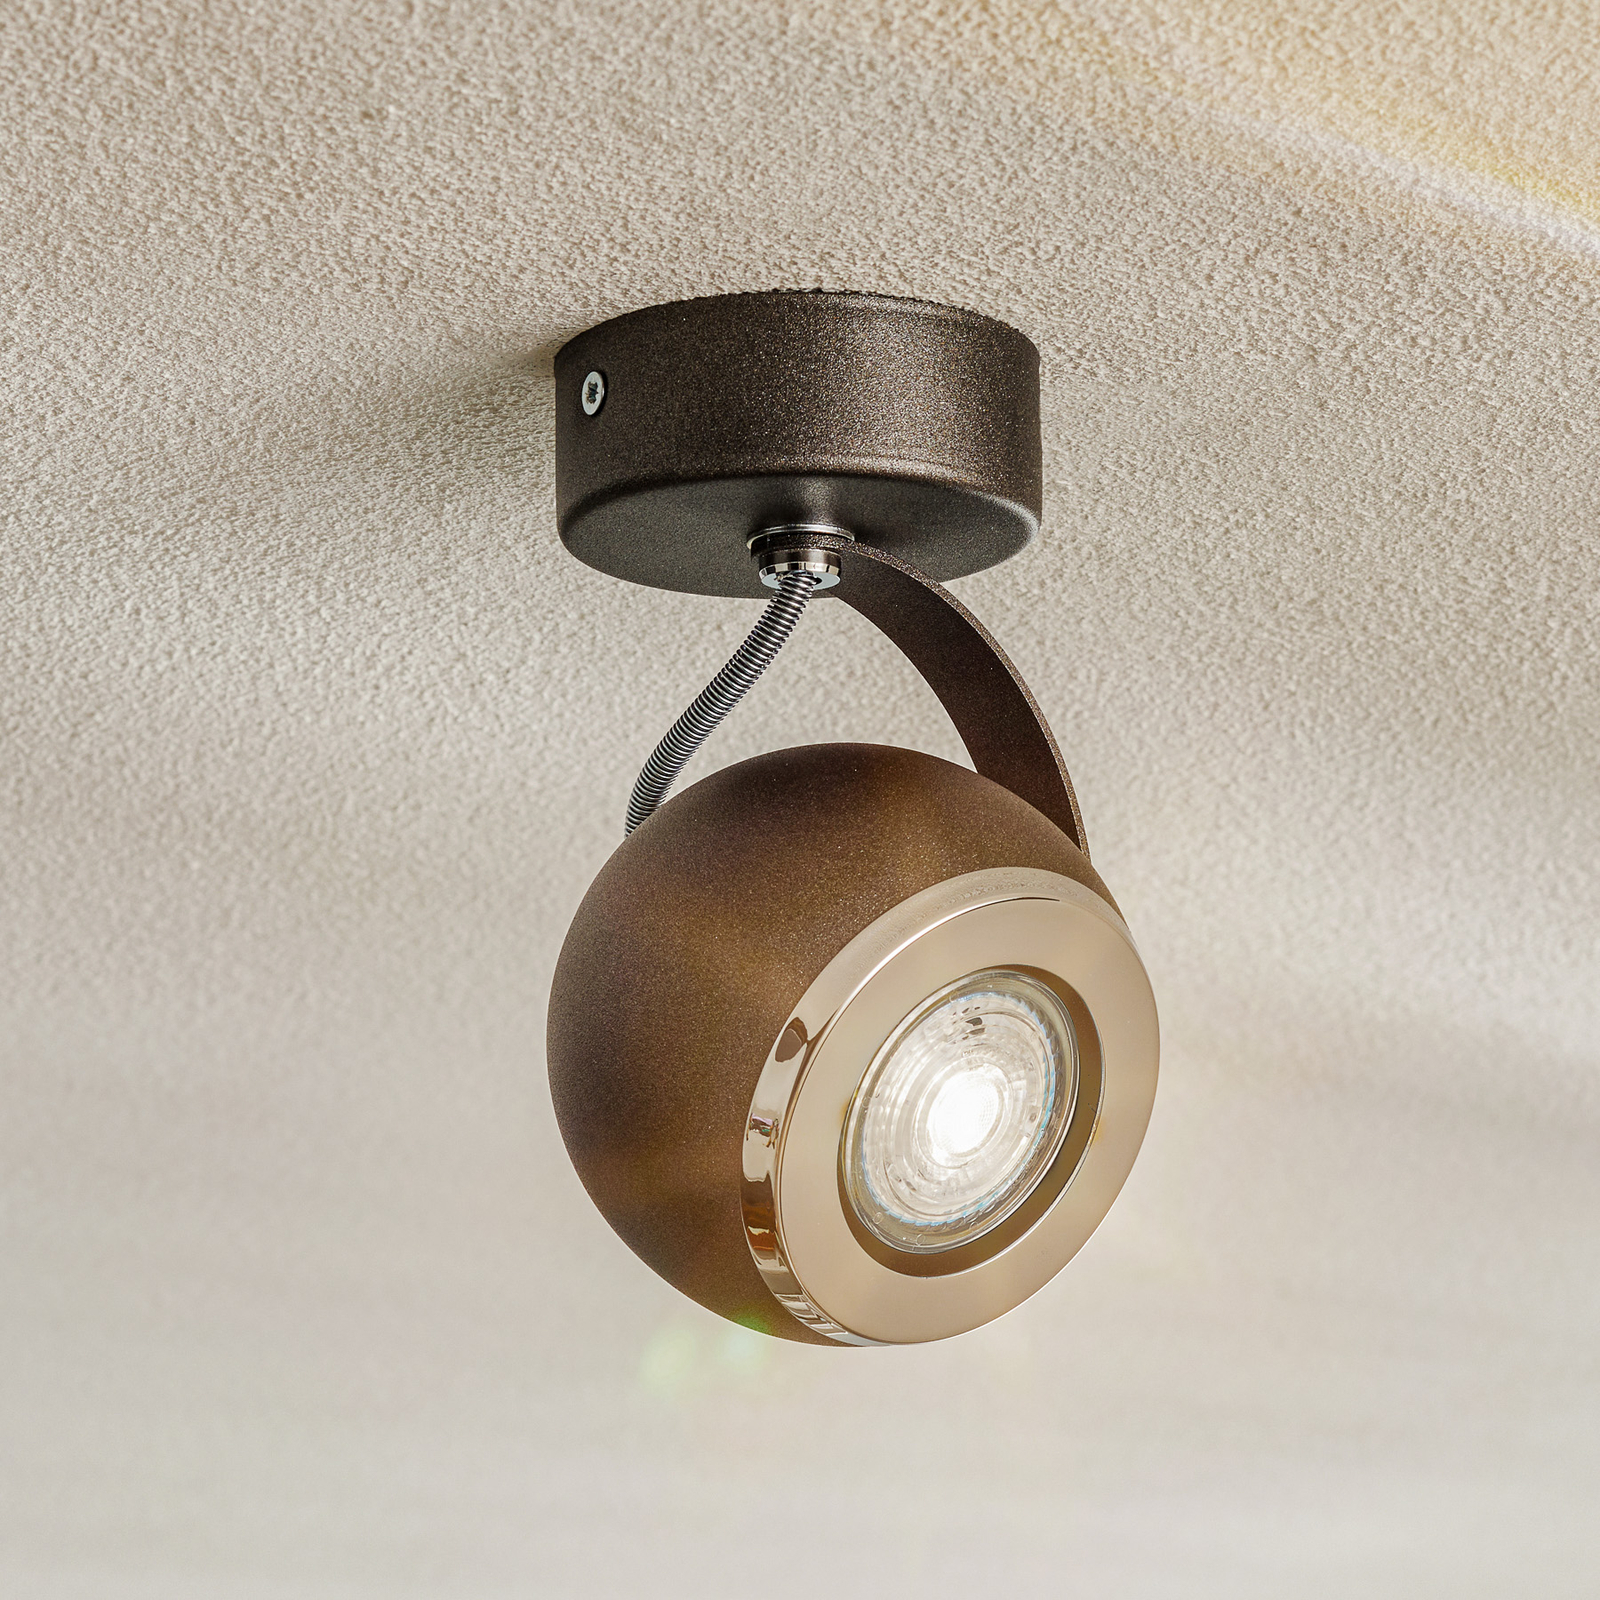 Kron ceiling spotlight, one-bulb, anthracite